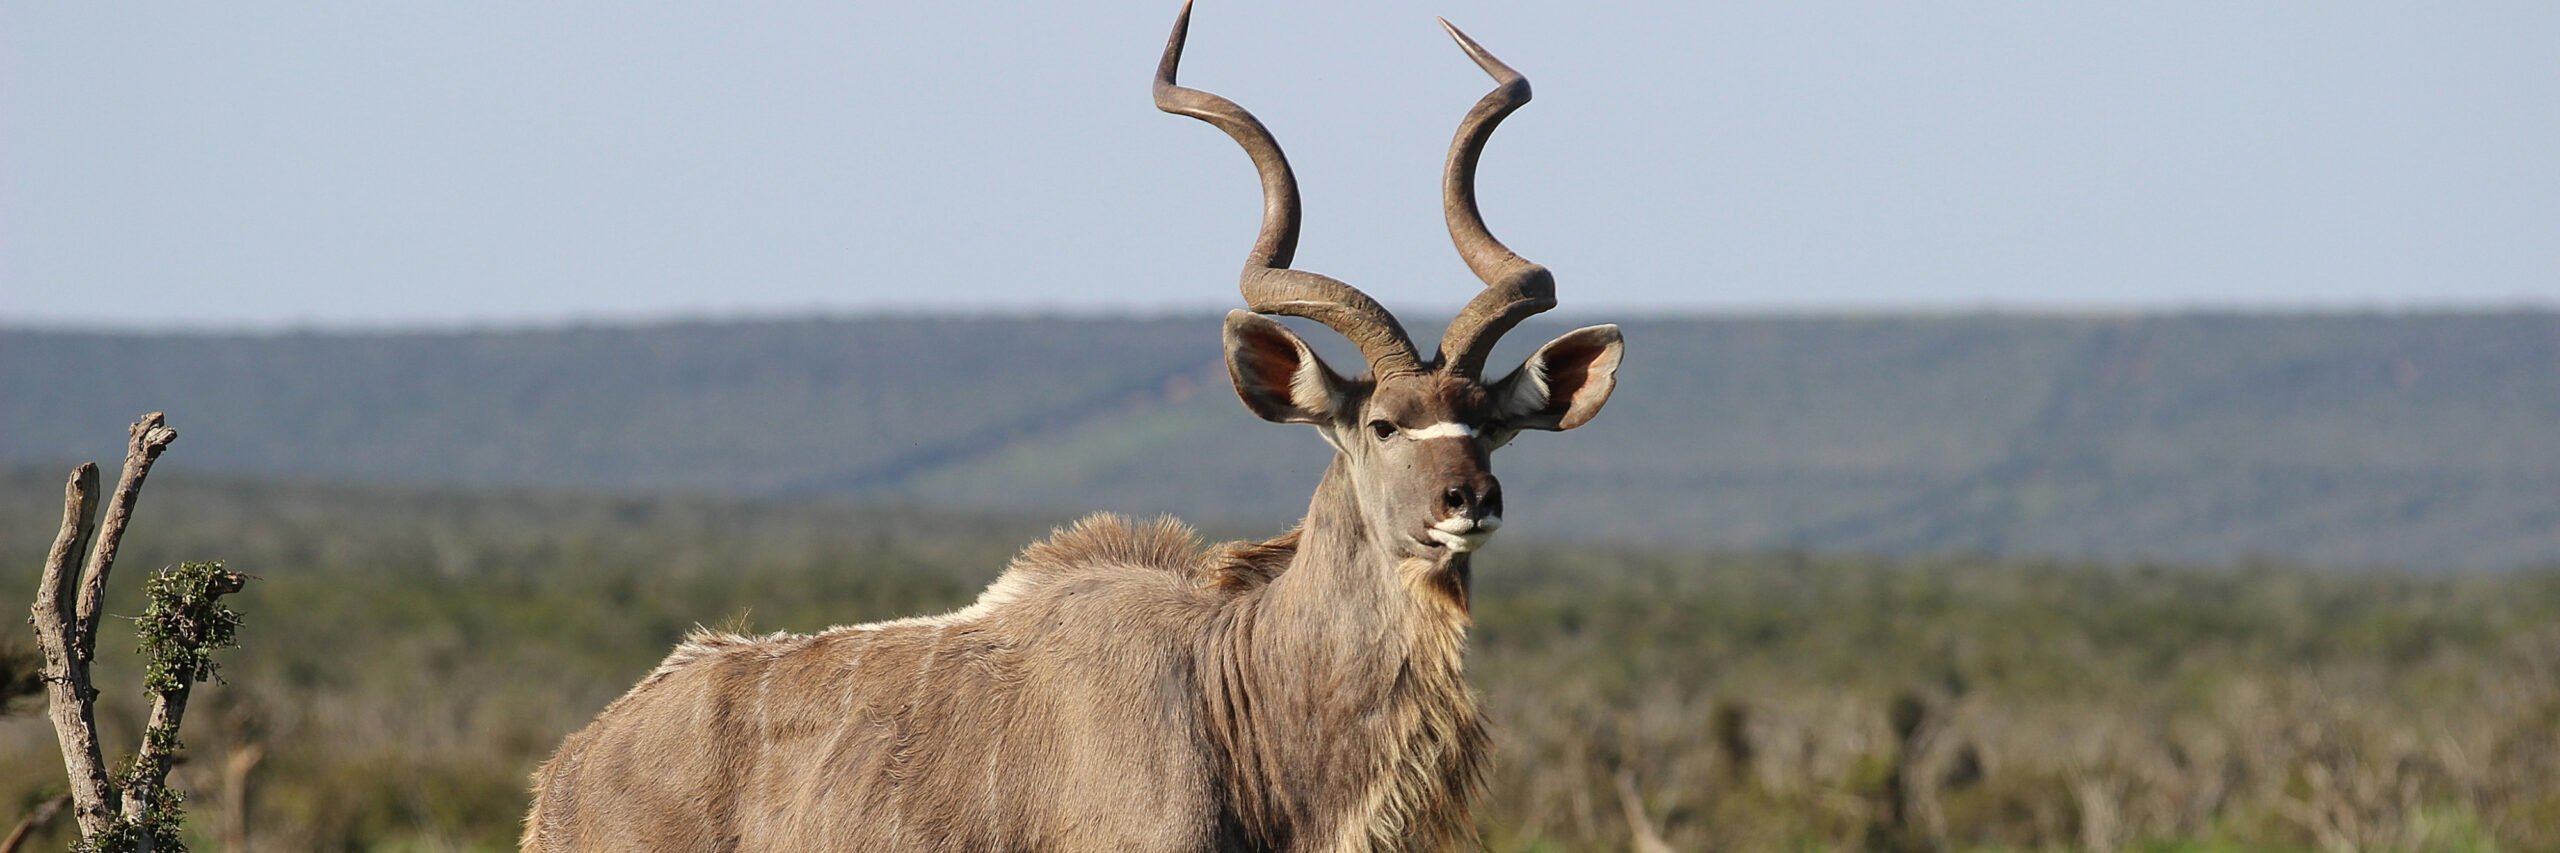 eastern-cape-greater-kudu